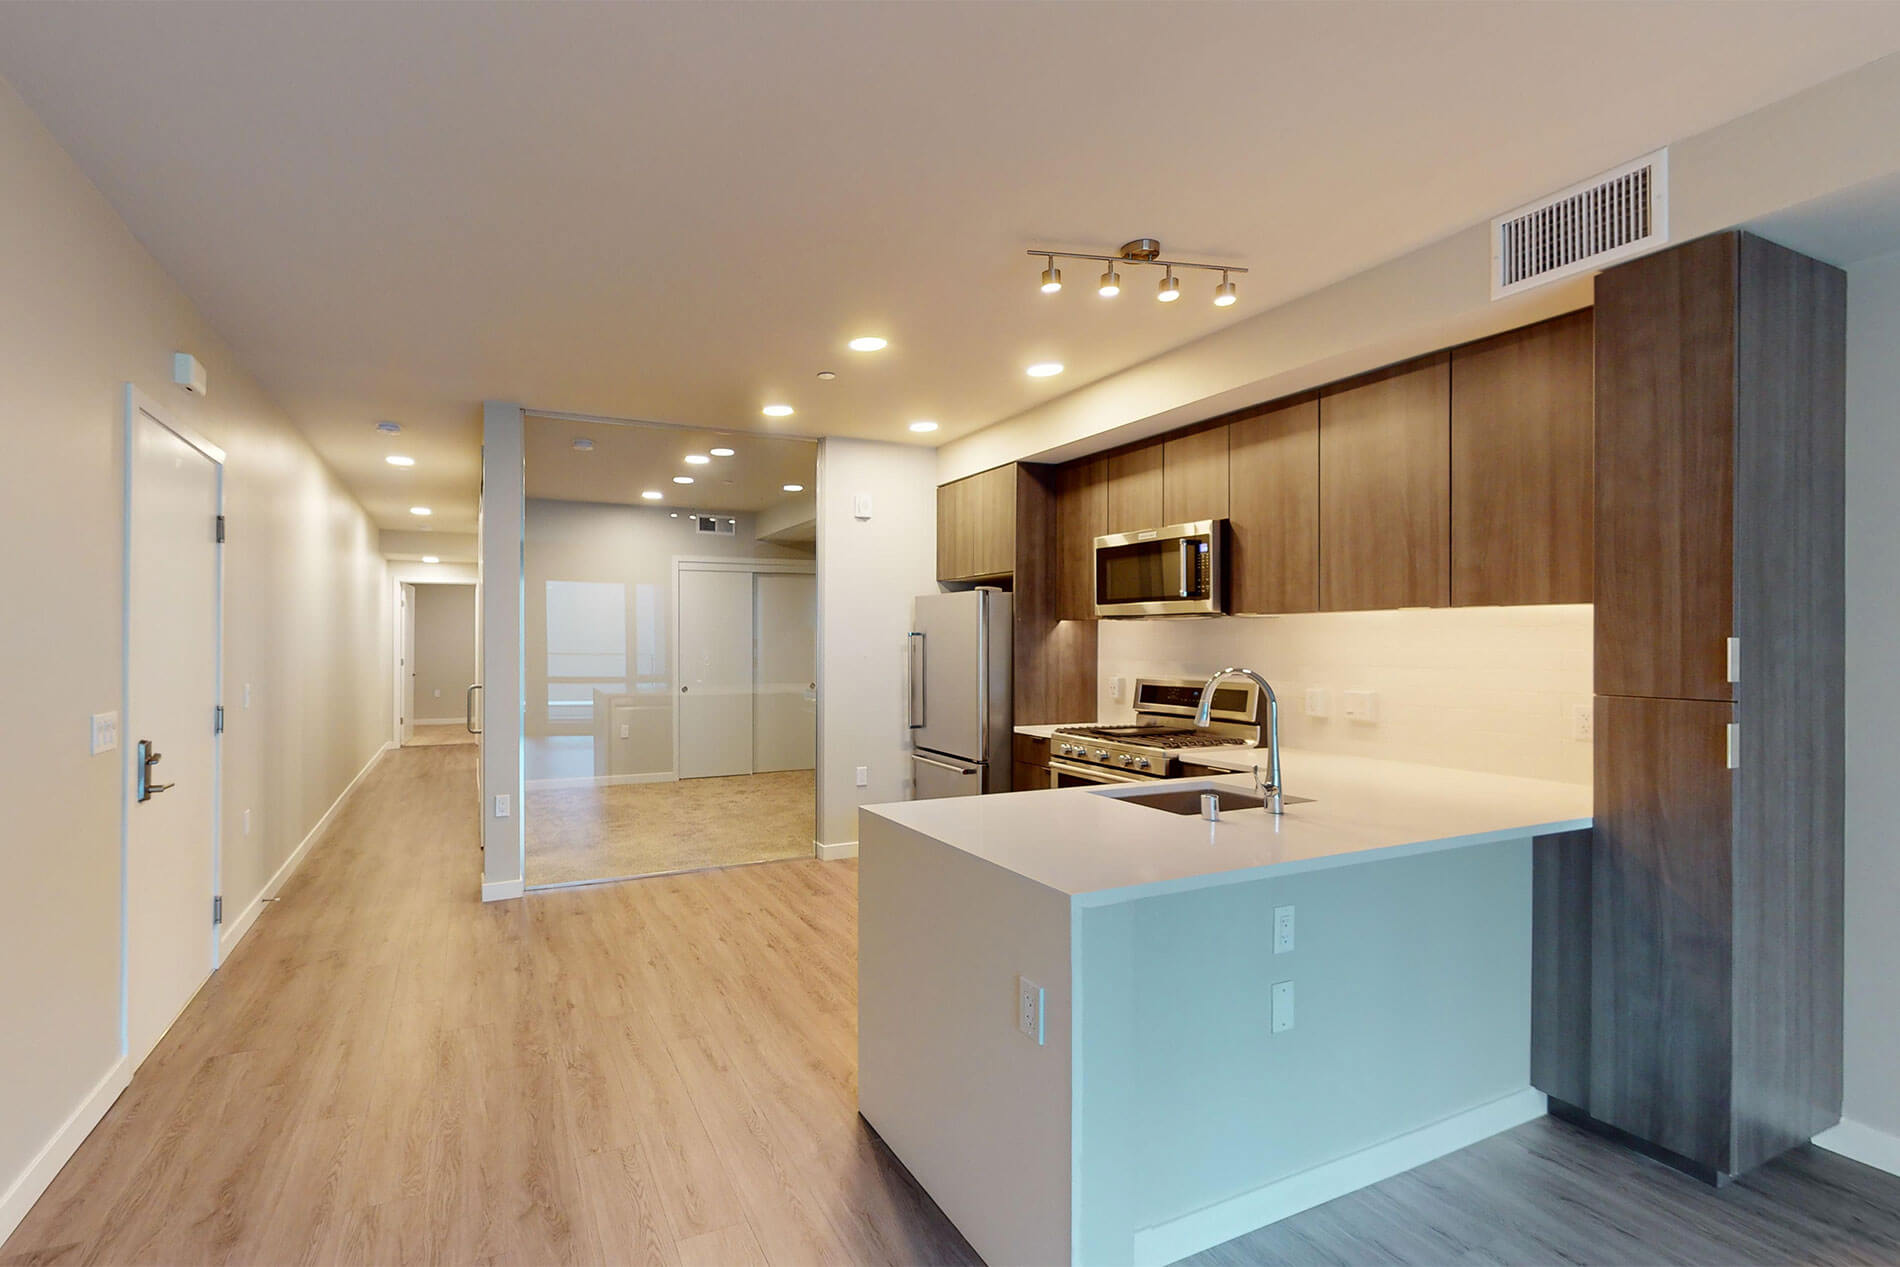 Lake Merritt apartment kitchen and living room